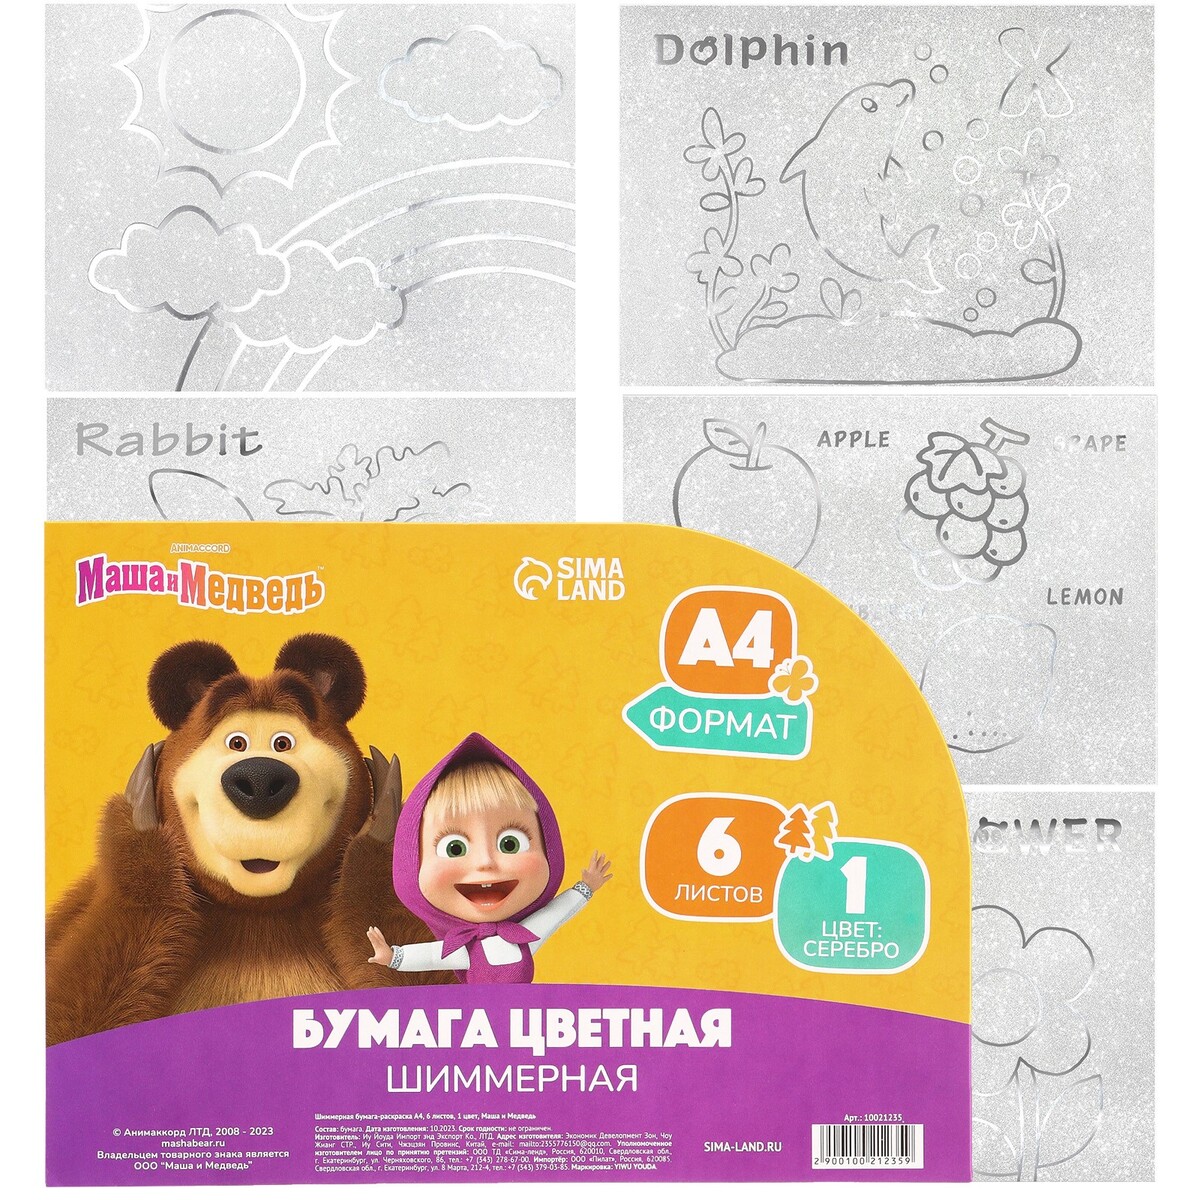 Бумага шиммерная, самоклеящаяся, раскраска а4, 6 листов, маша и медведь Маша и медведь